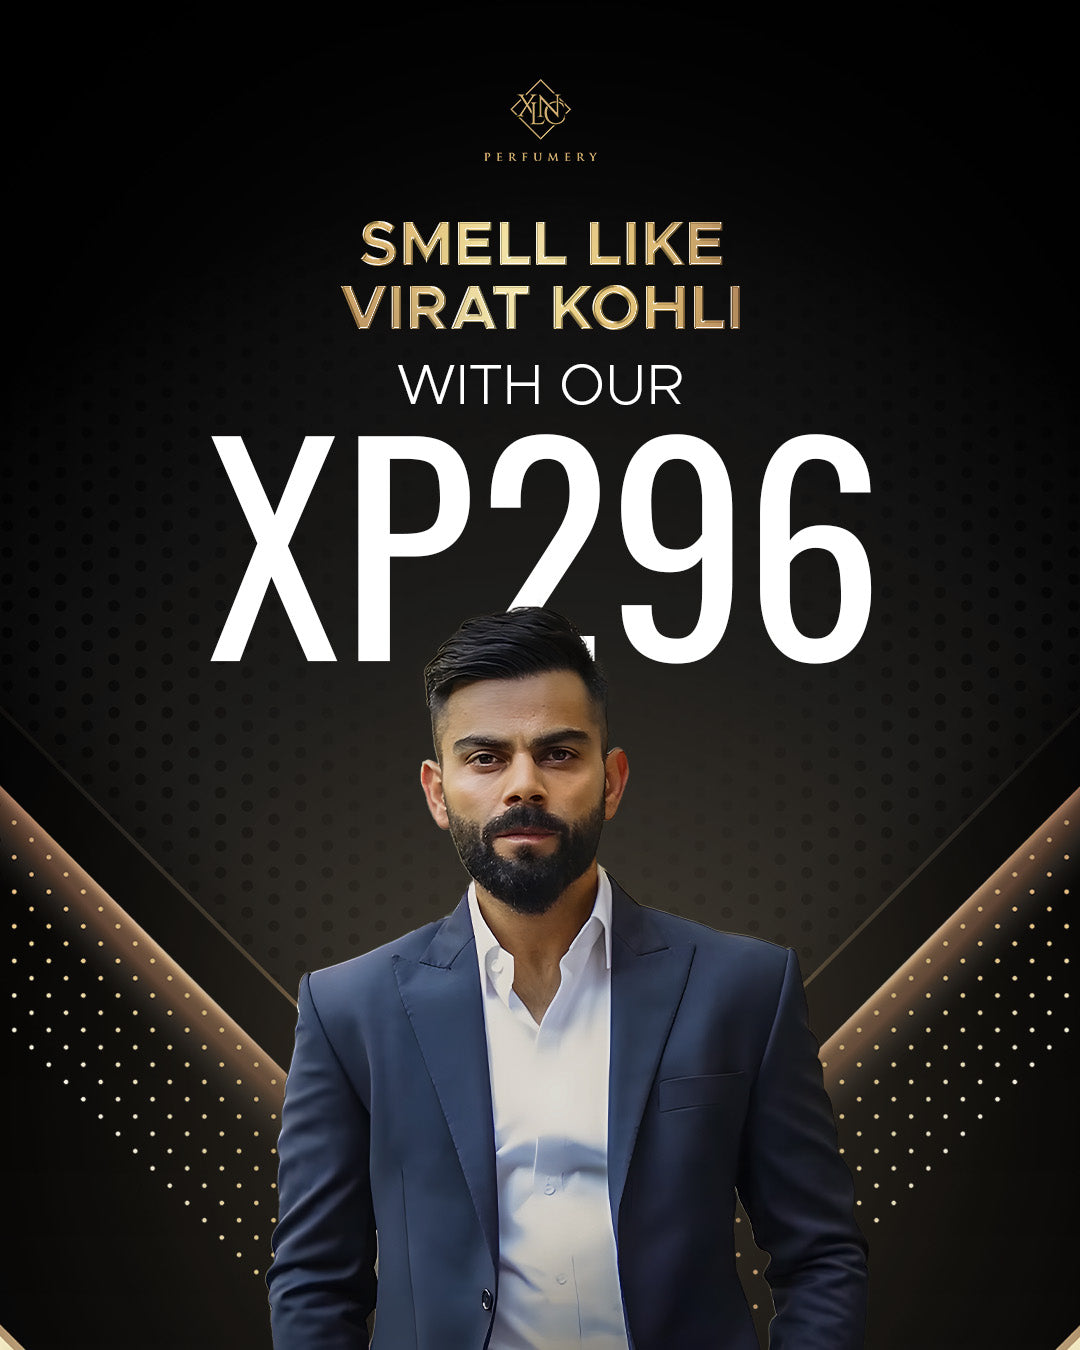 XP296 (Inspired by VIKING) Worn By Virat Kohli